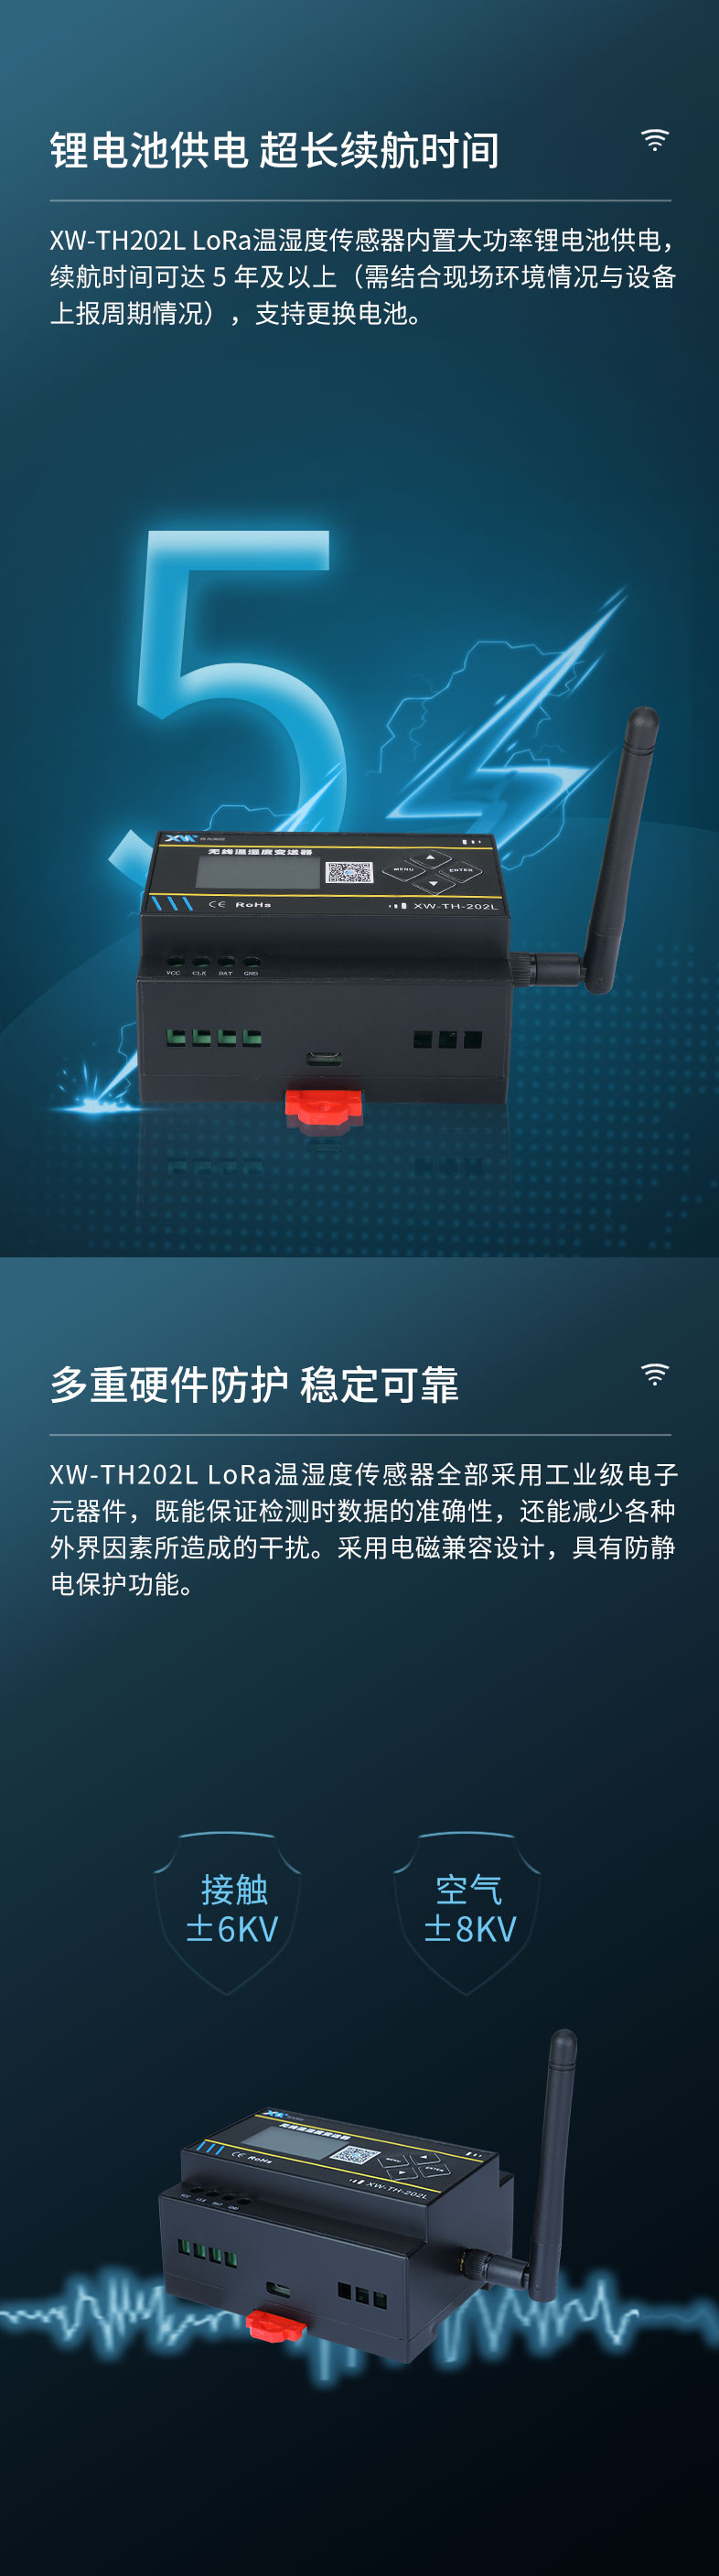 XW-TH202L LoRa温湿度传感器详情页3